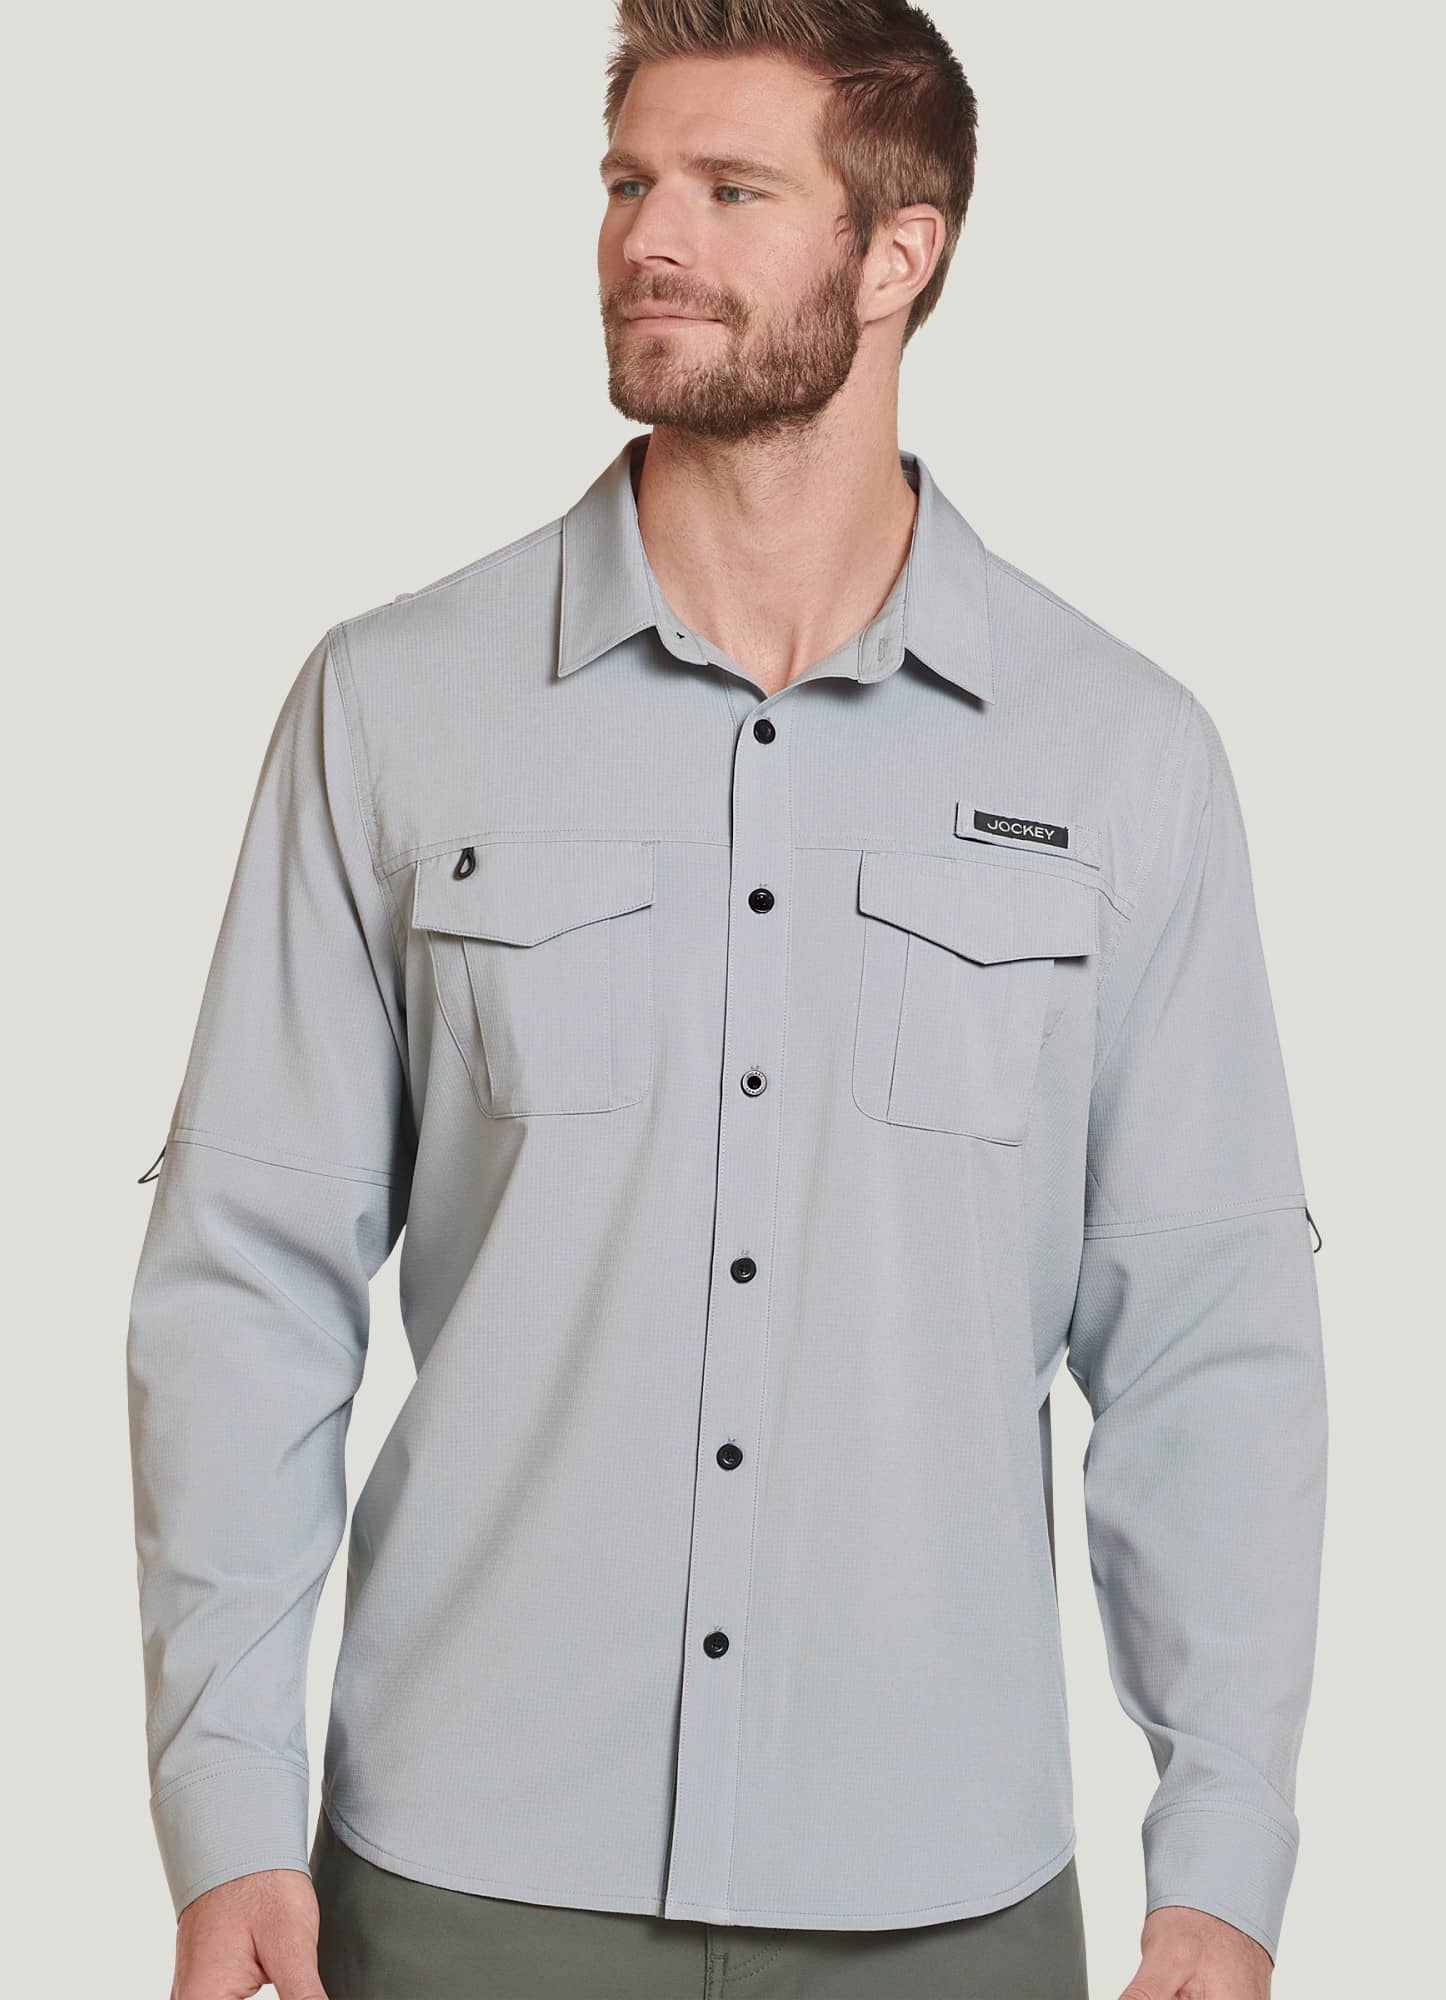 Jockey Outdoors Long Sleeve Fishing Shirt in Grey Agate